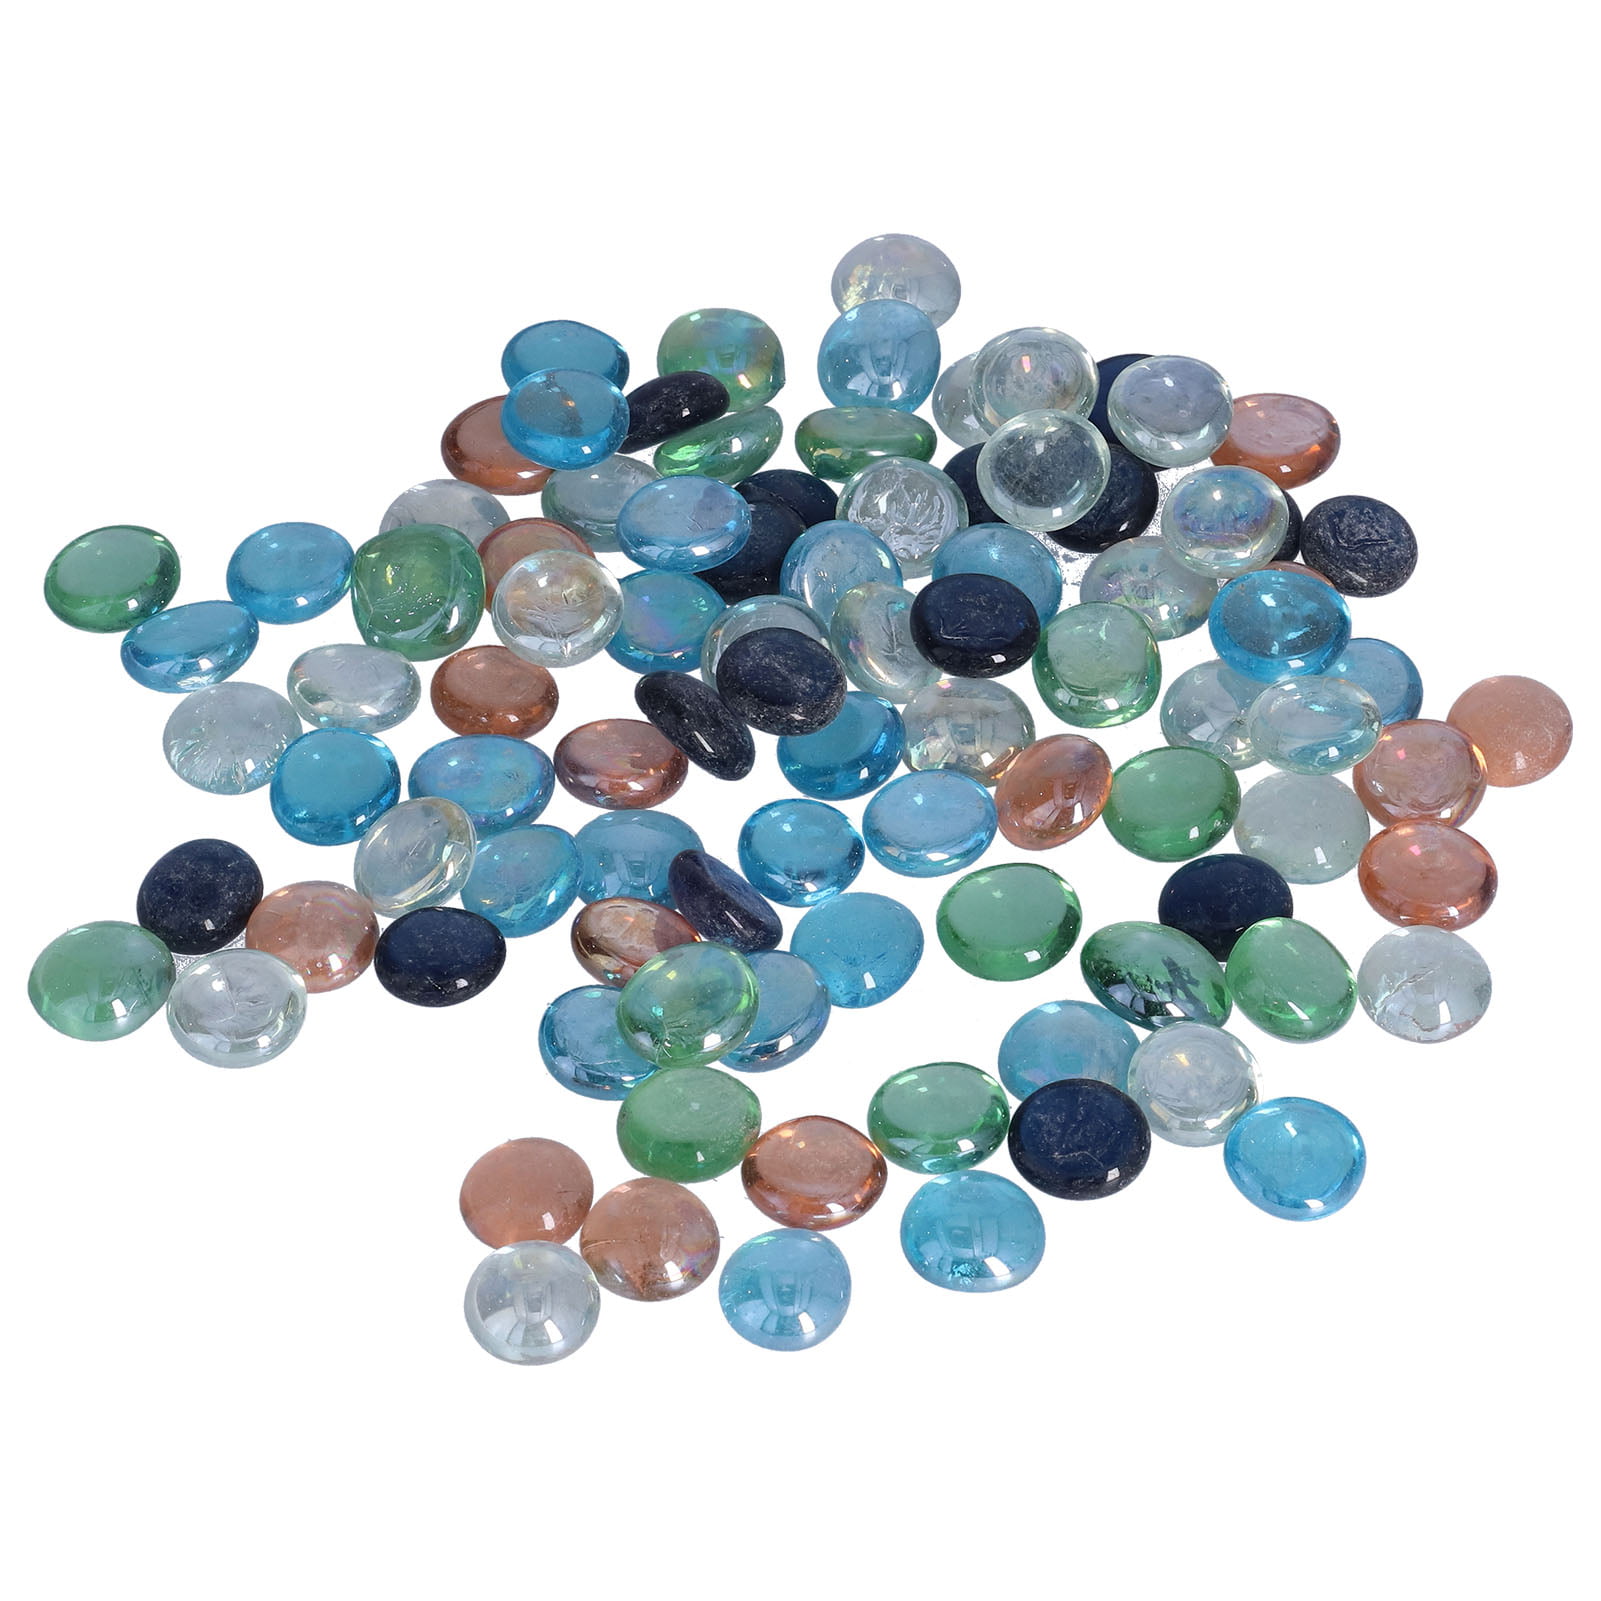 Decorative Stones and Recycled Glass - Midland Stone UK